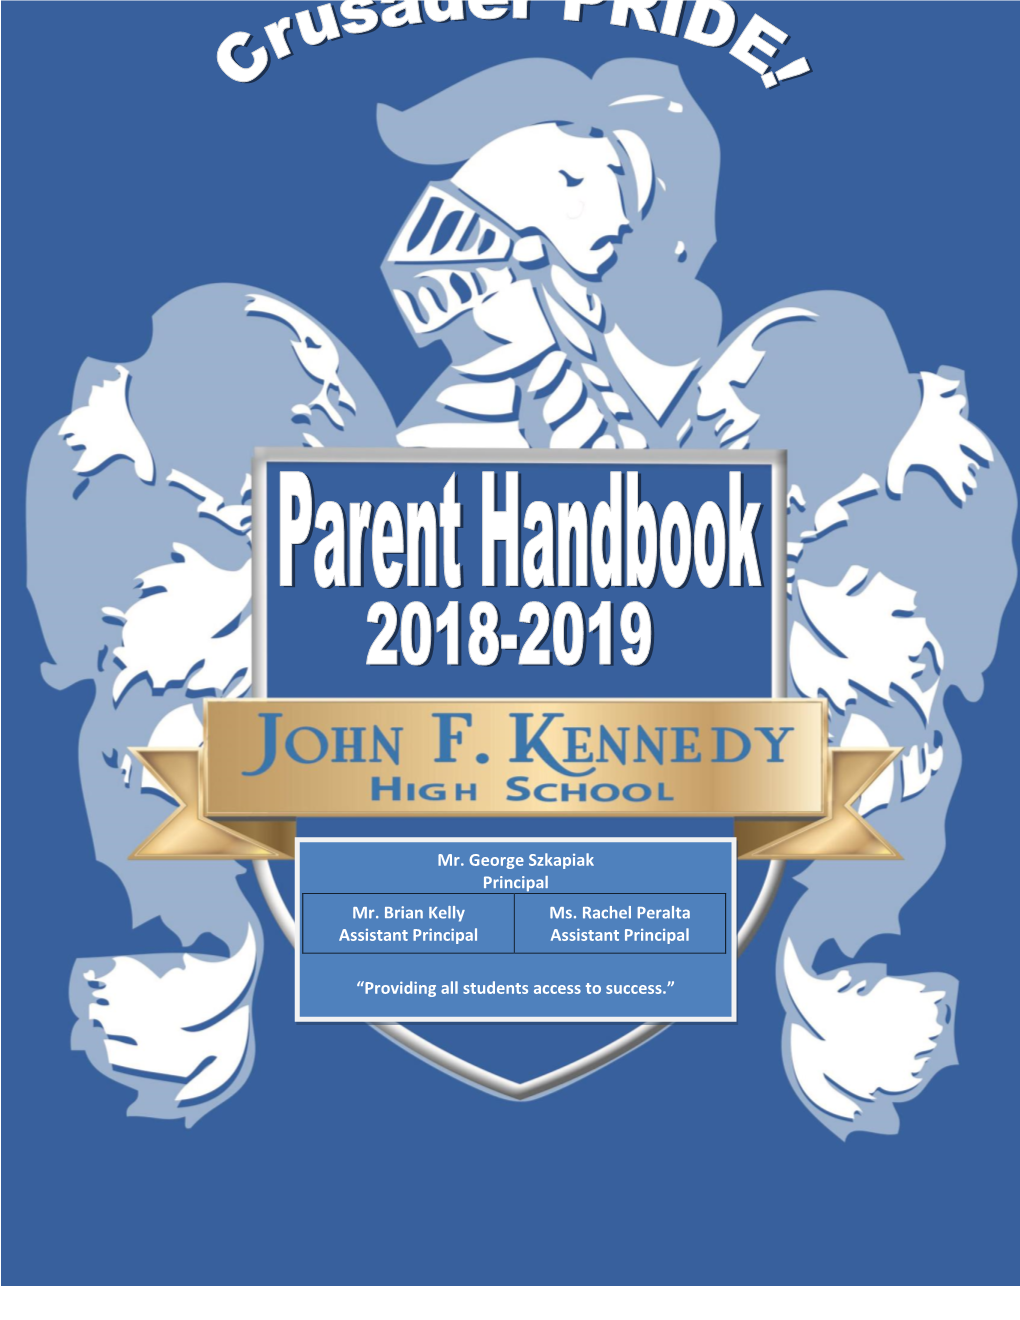 Handy Guide to the Parent Handbook